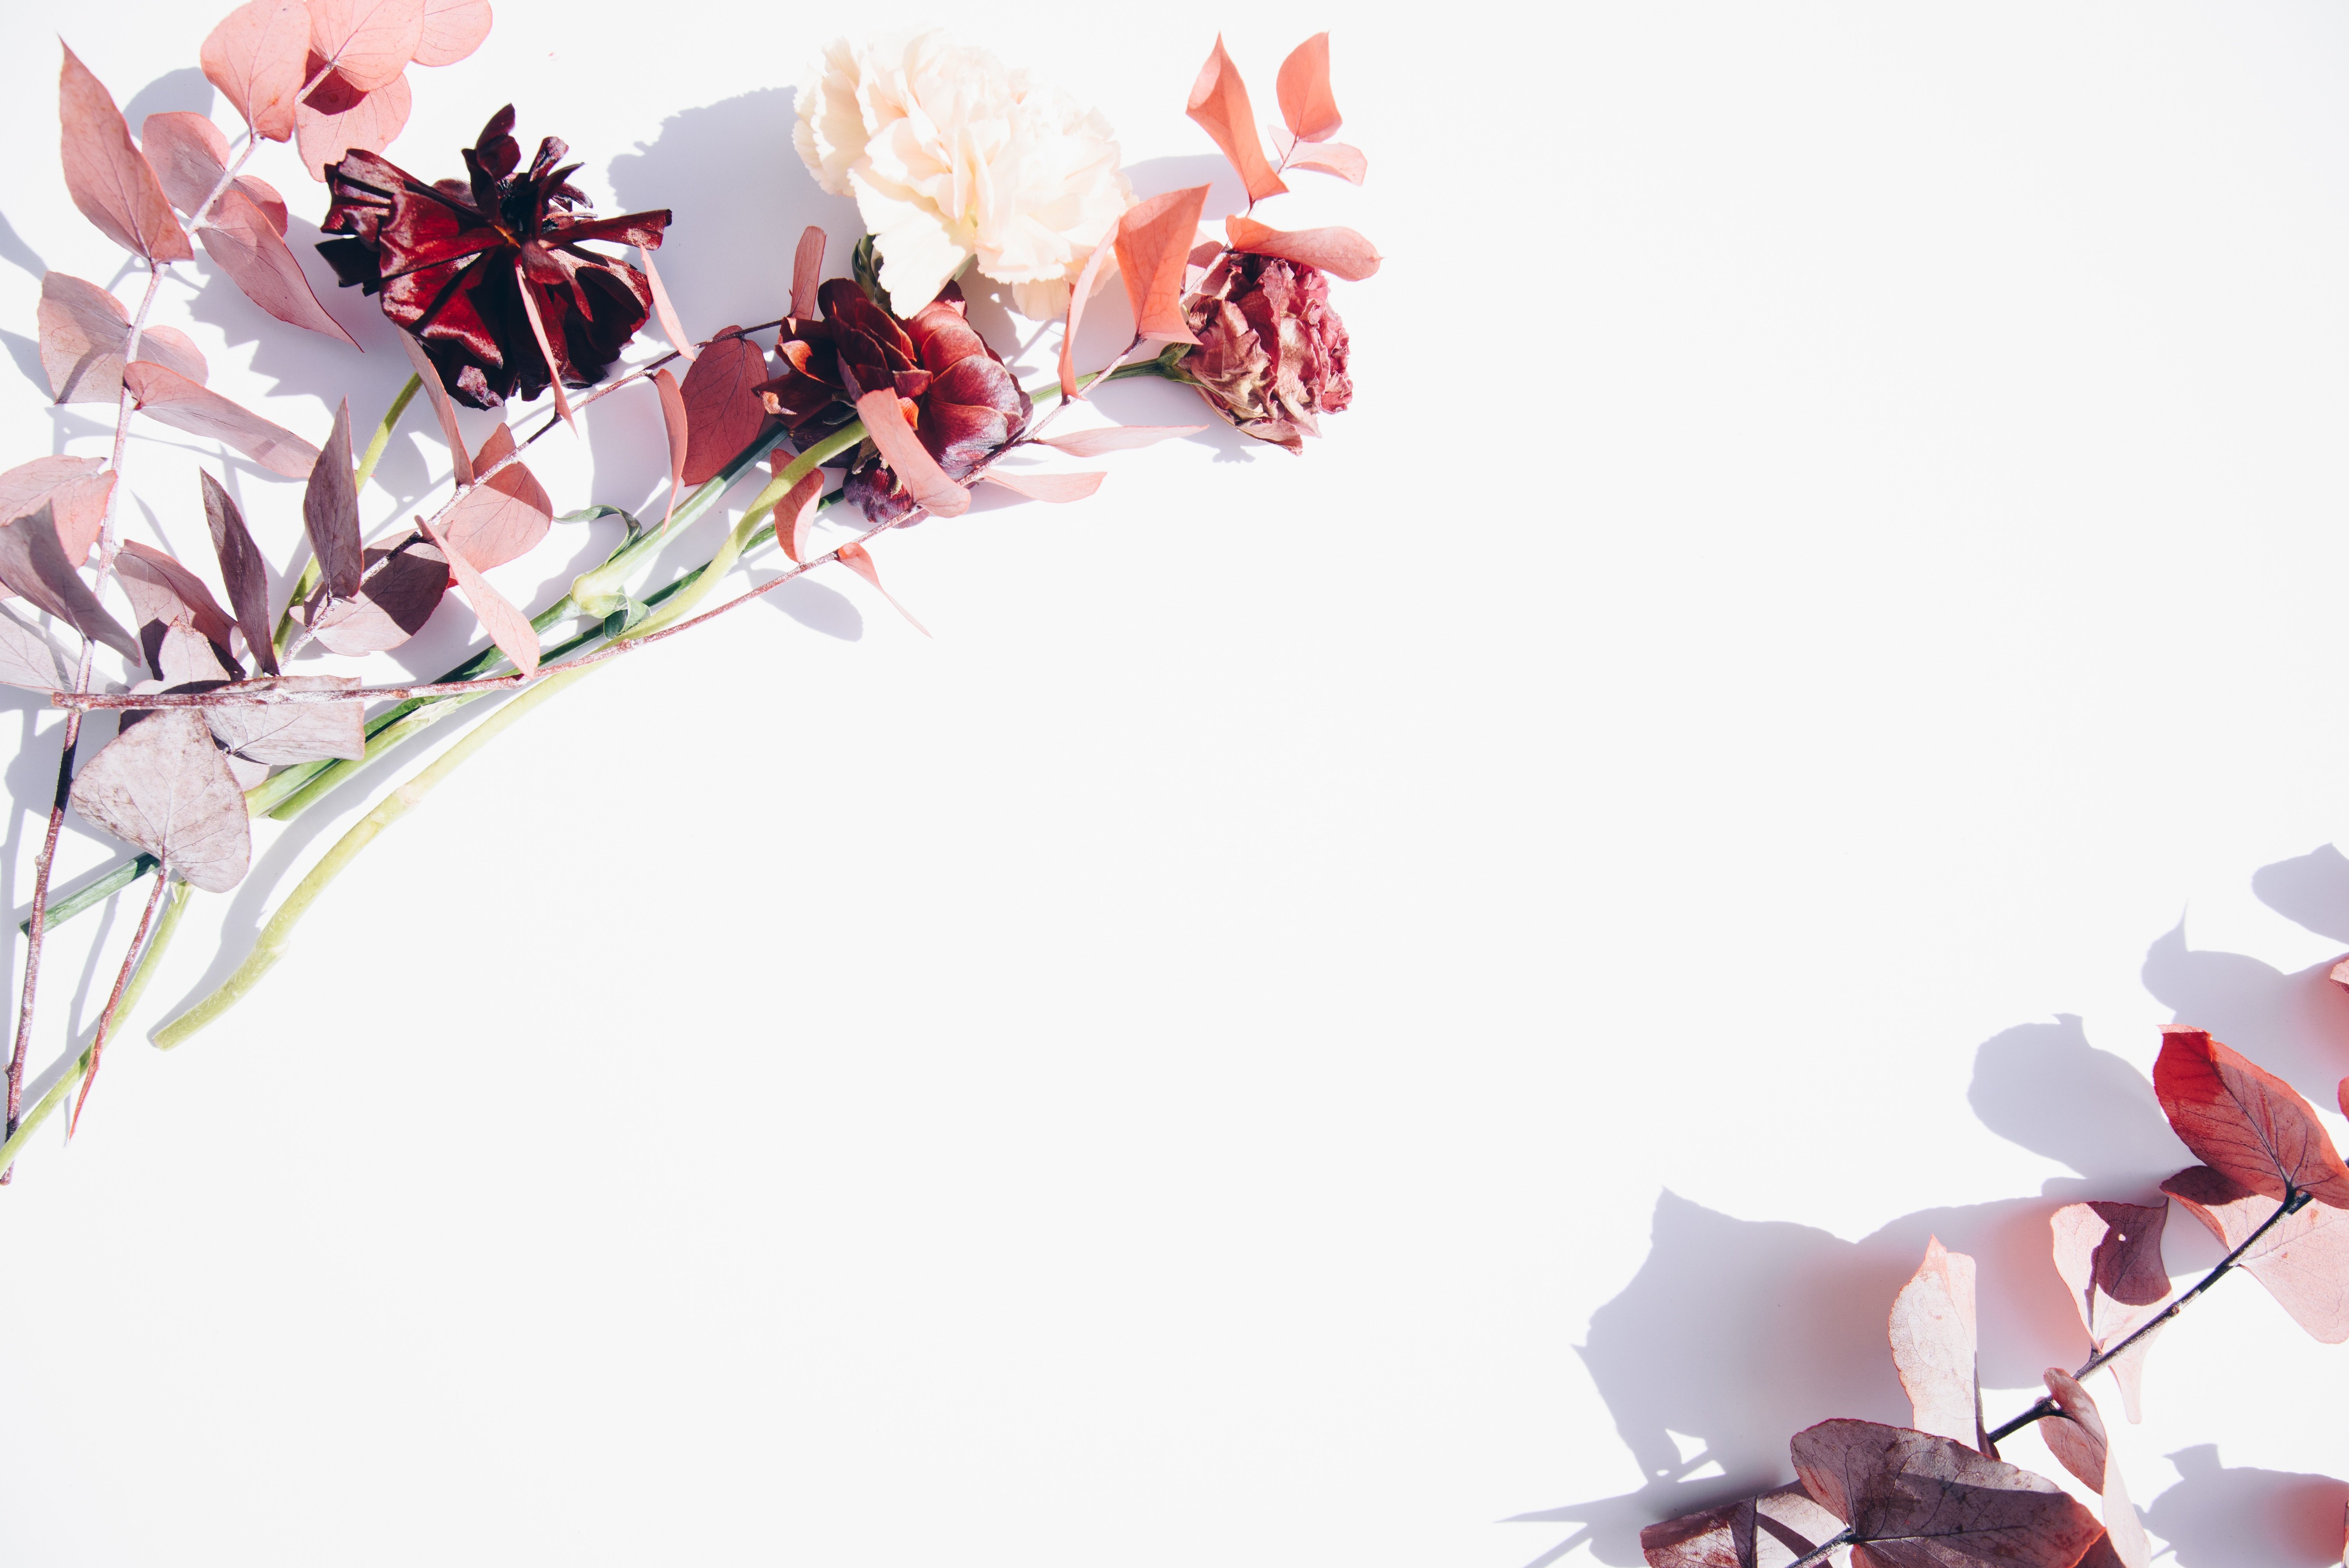 6016x4016 #botanical, #Free image, #floral, #red, #white, #natural, #background, #wallpaper, #leafe, #flower, #simple, #autumn, #mauve, #pink, #nature, #flatlay. Mocah.org HD Desktop Wallpaper